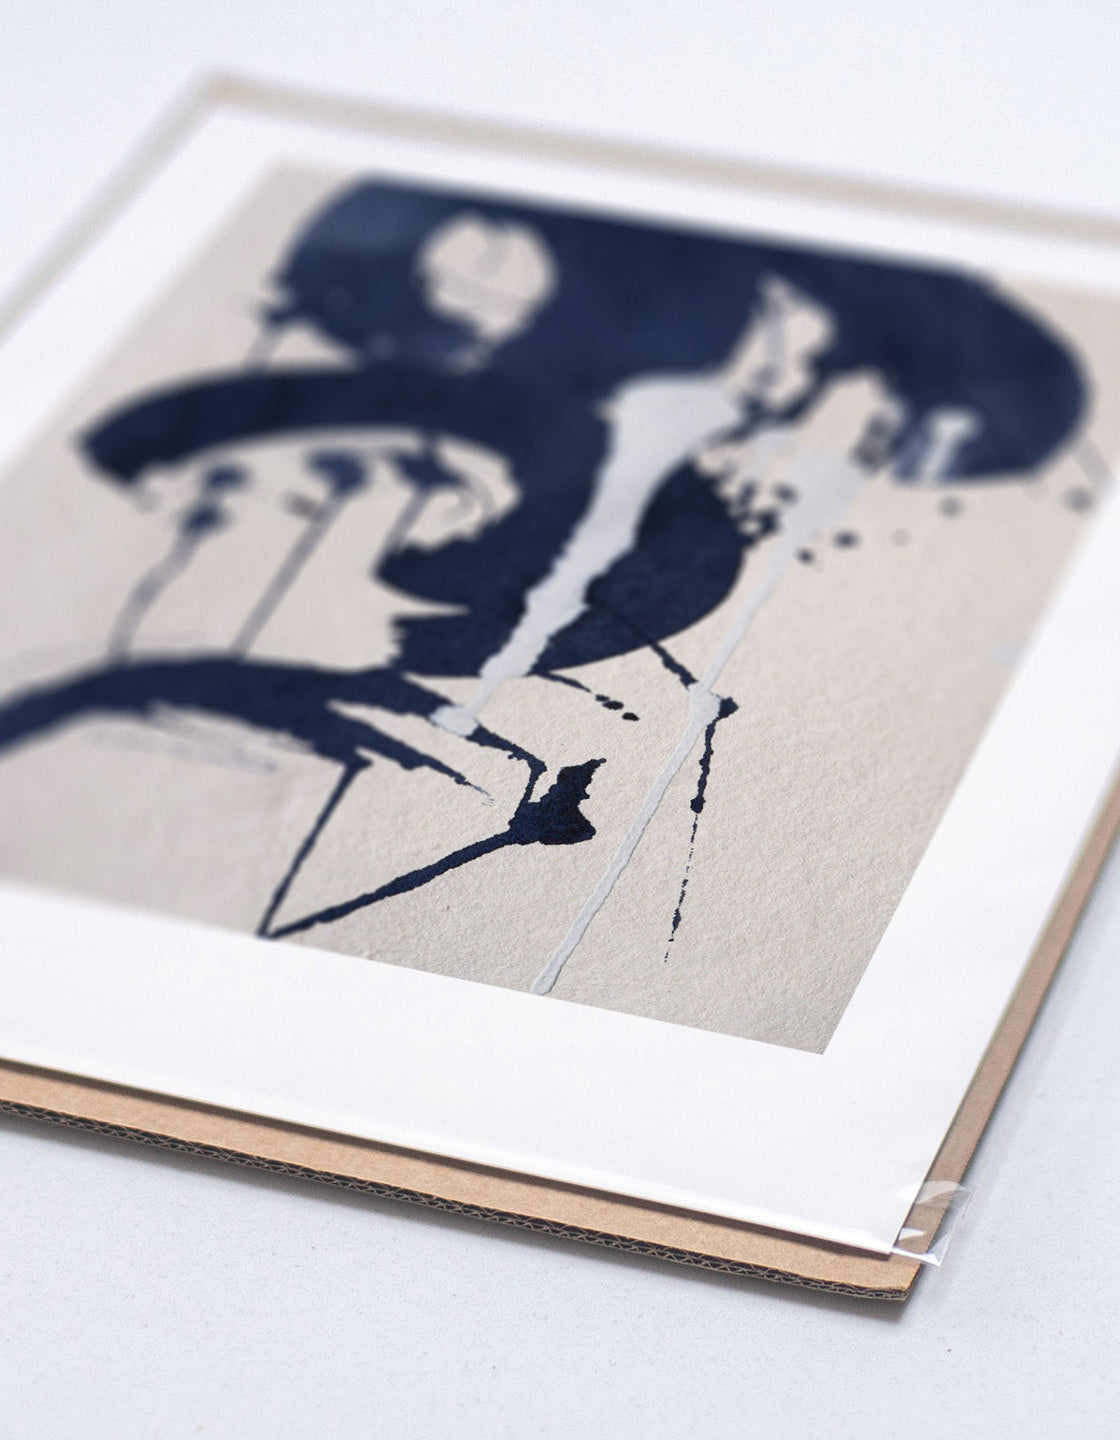 Rocket Jack minimal art print - Japandi design in navy/cream